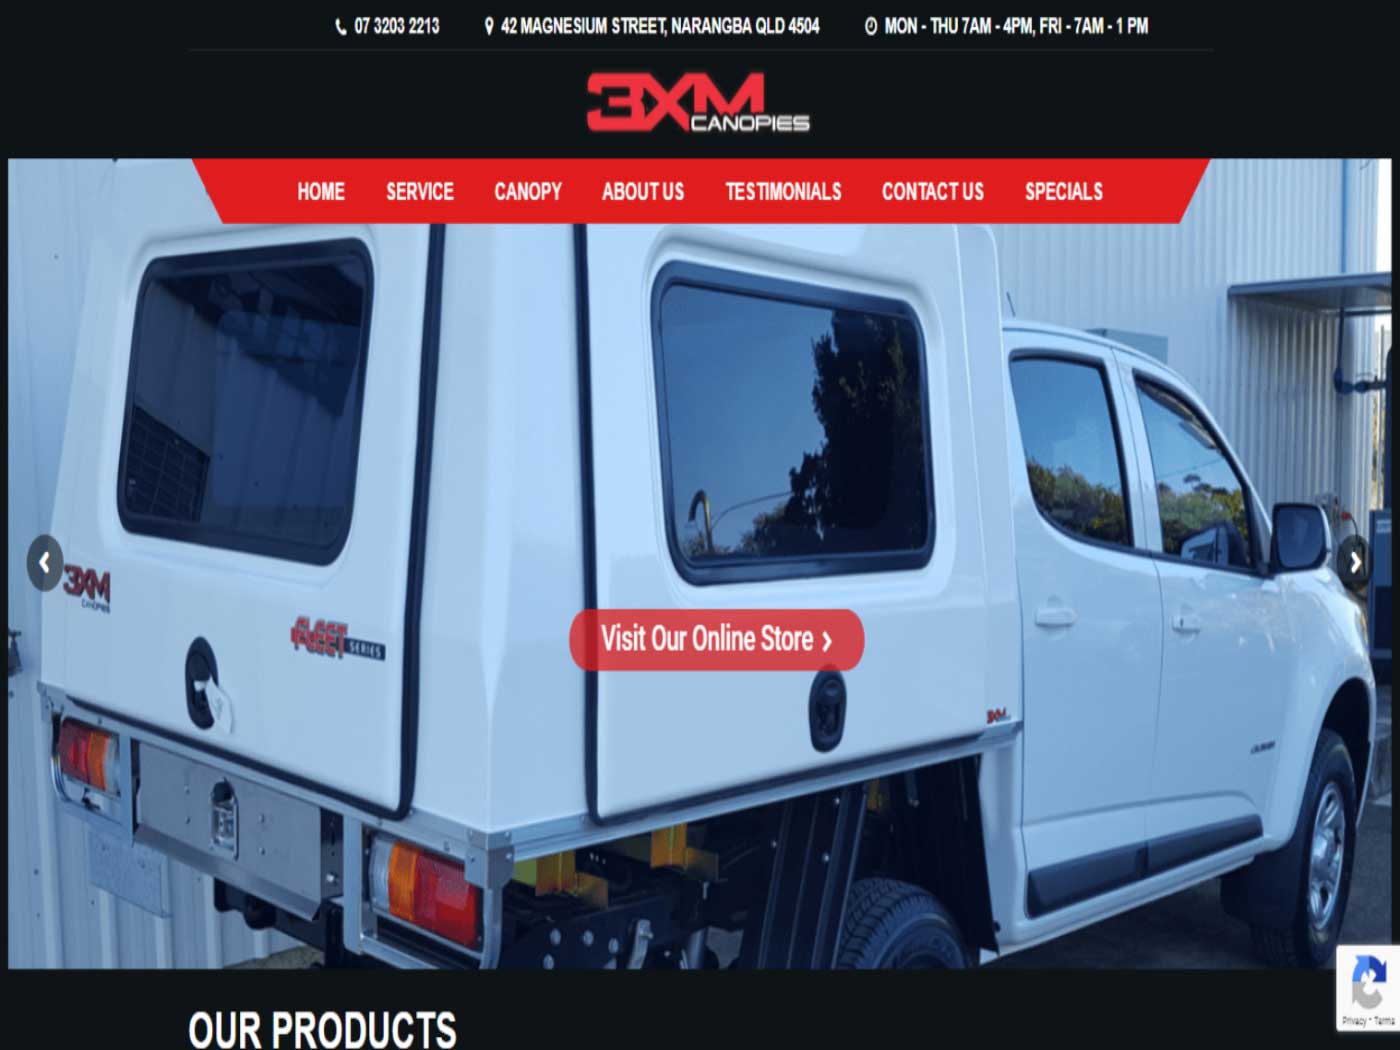 3xm-Ecommerce Website Design in Brisbane